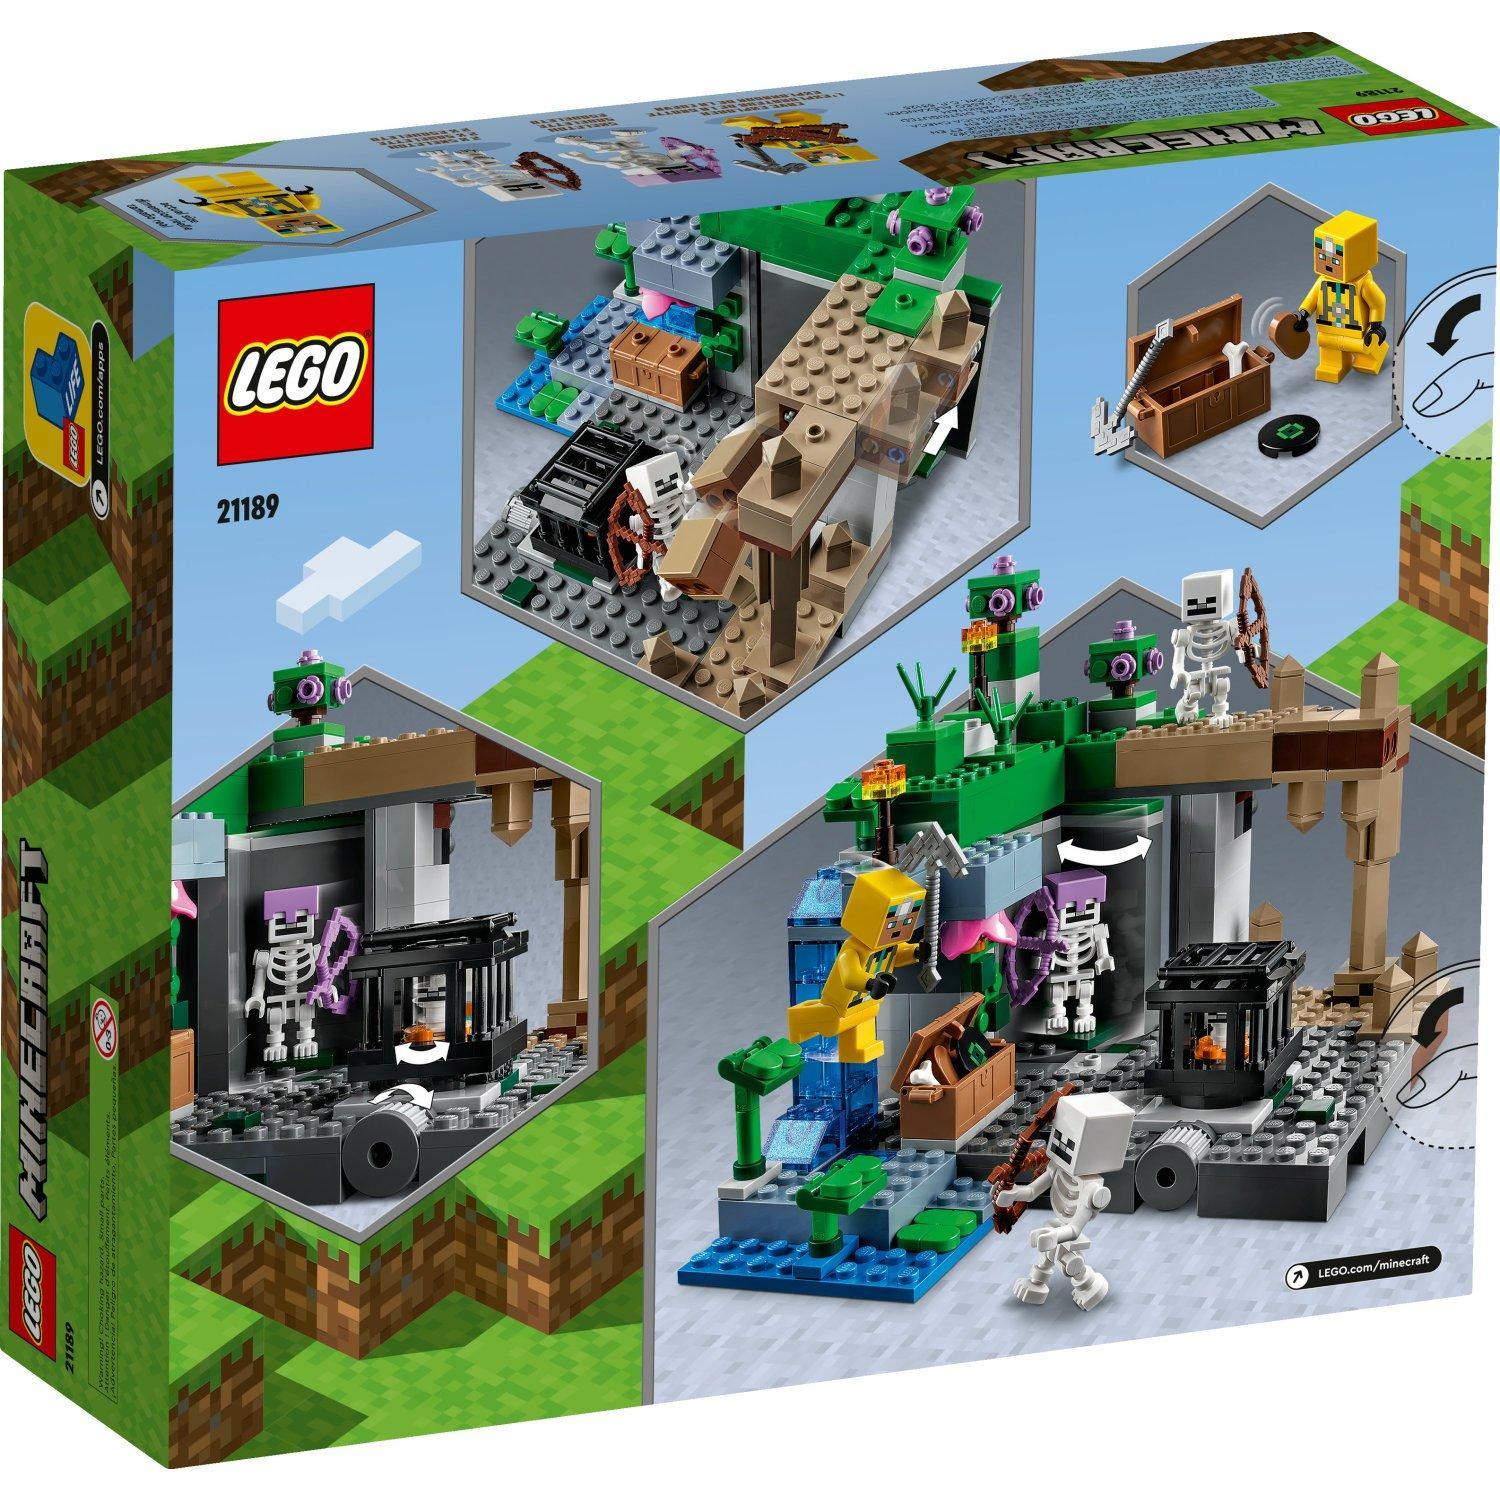 LEGO Minecraft The Skeleton Dungeon 21189 Building Kit